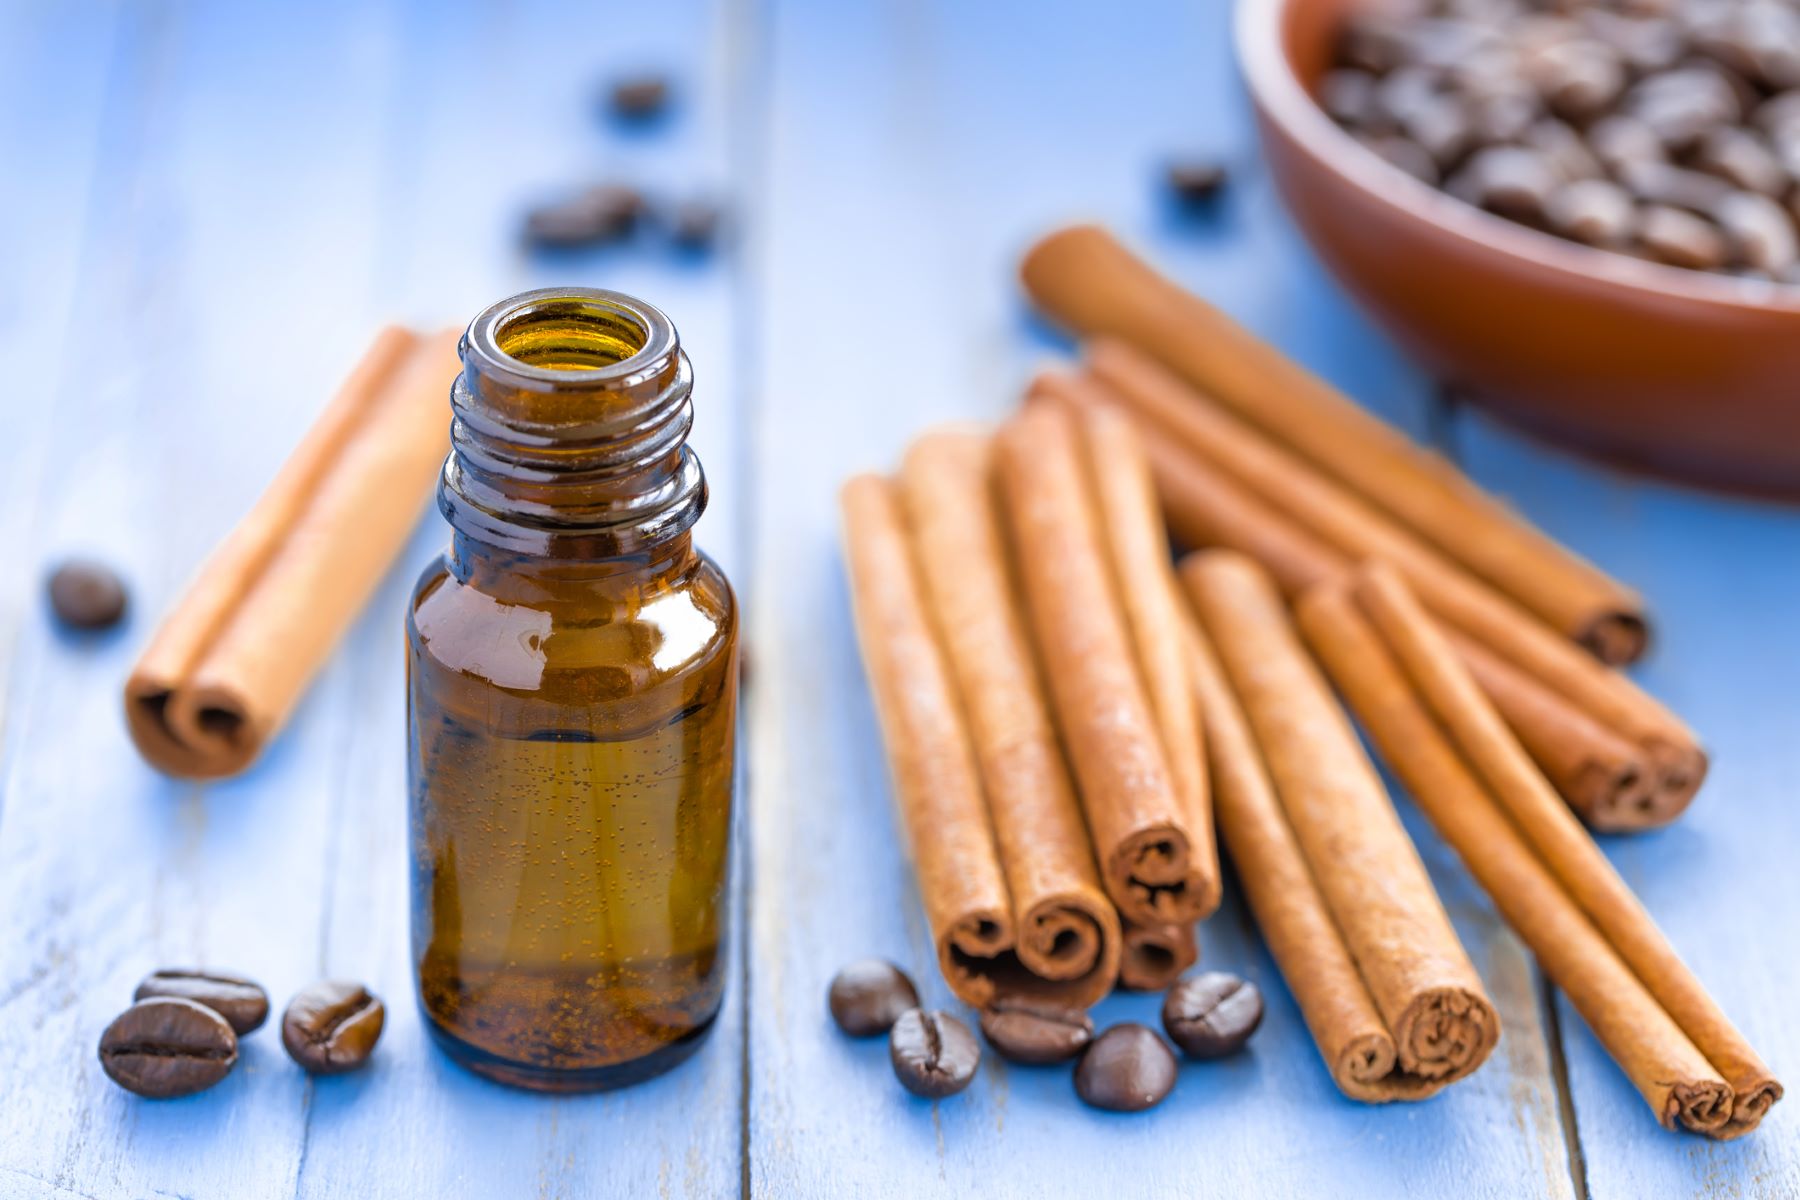 Does cinnamon oil help with hair loss?